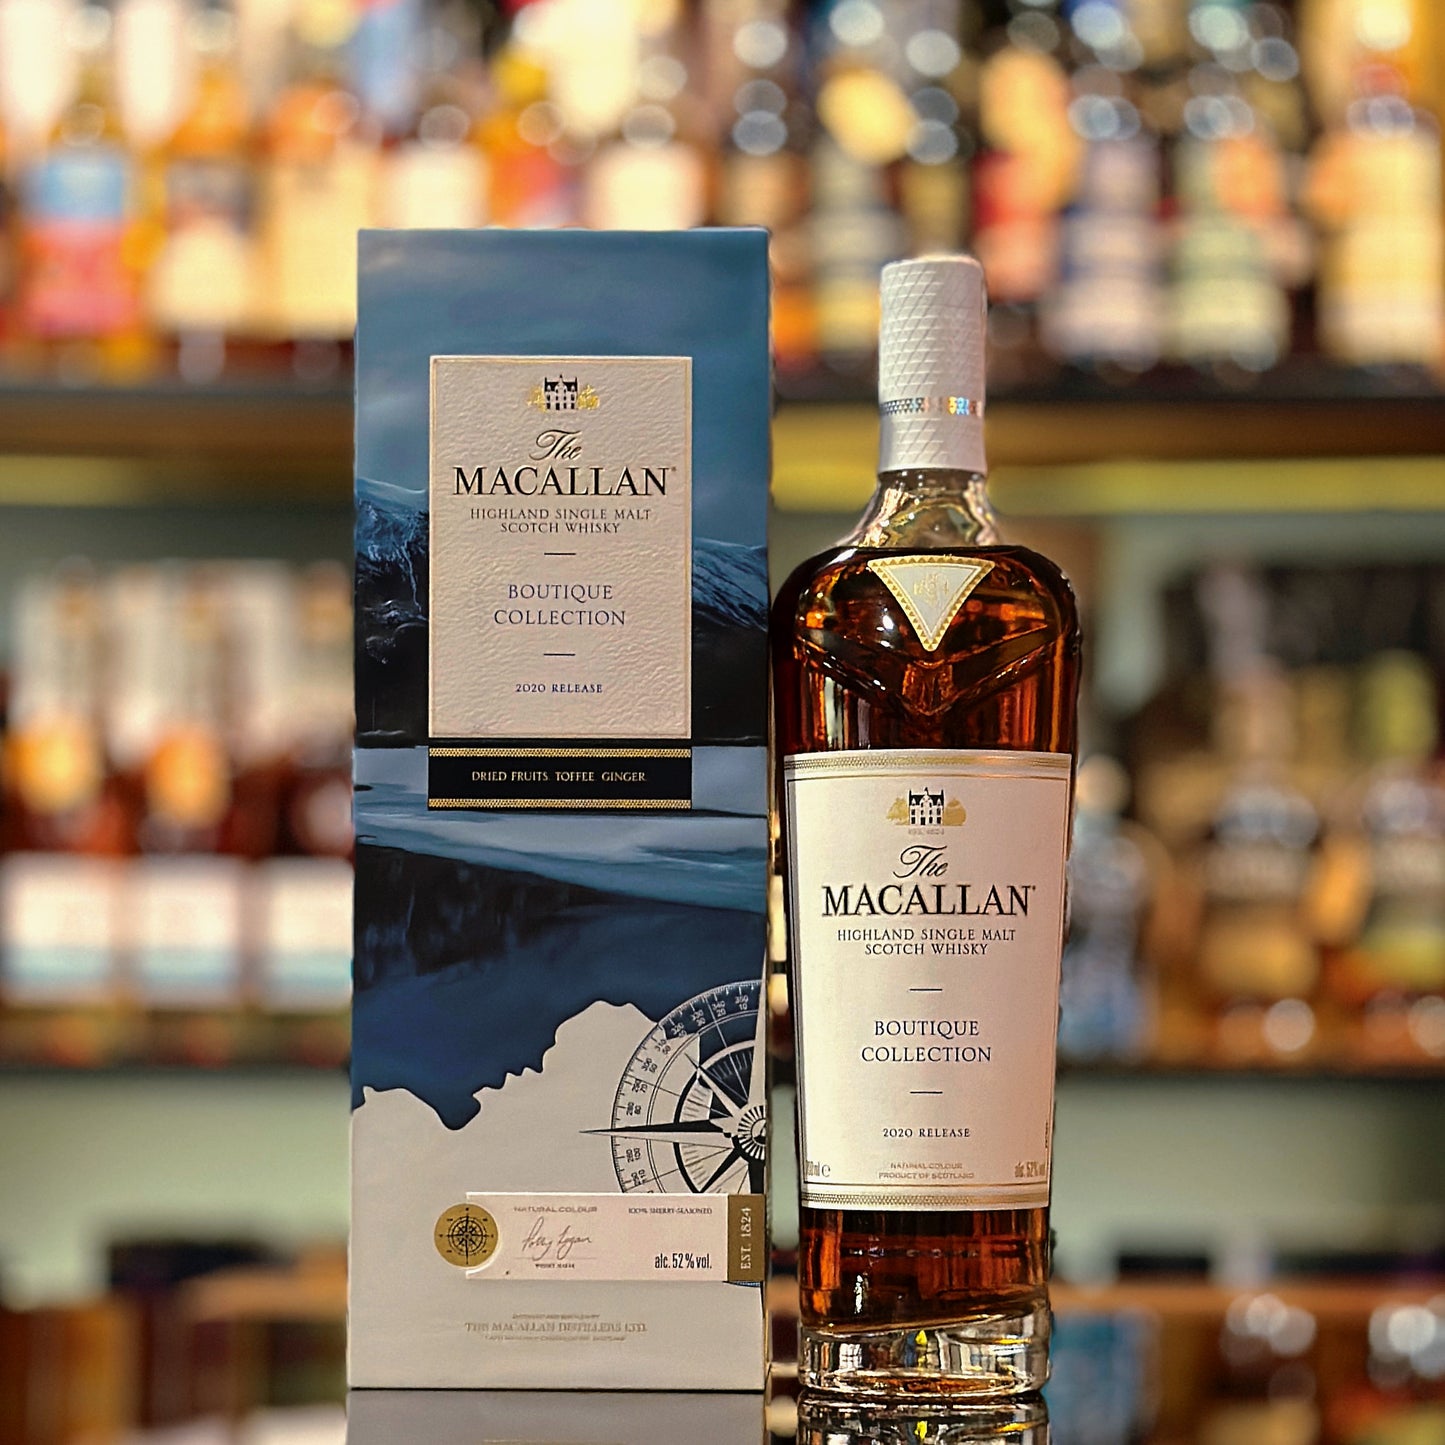 Macallan Boutique Collection (2020 Release) Single Malt Scotch Whisky